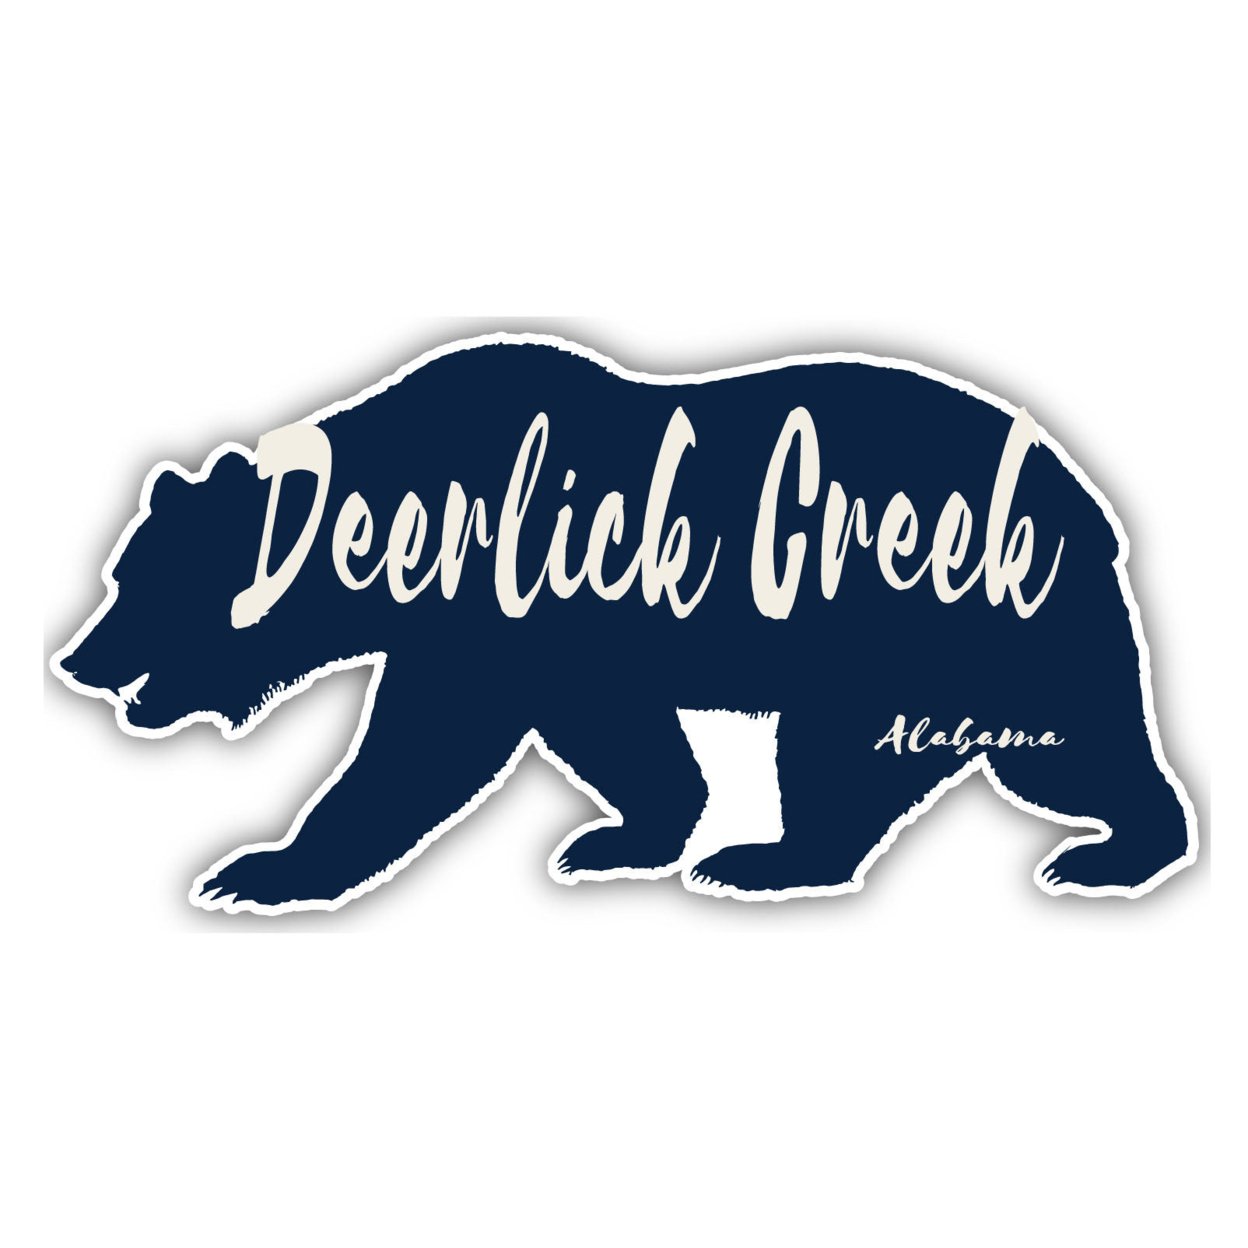 Deerlick Creek Alabama Souvenir Decorative Stickers (Choose Theme And Size) - Single Unit, 6-Inch, Adventures Awaits